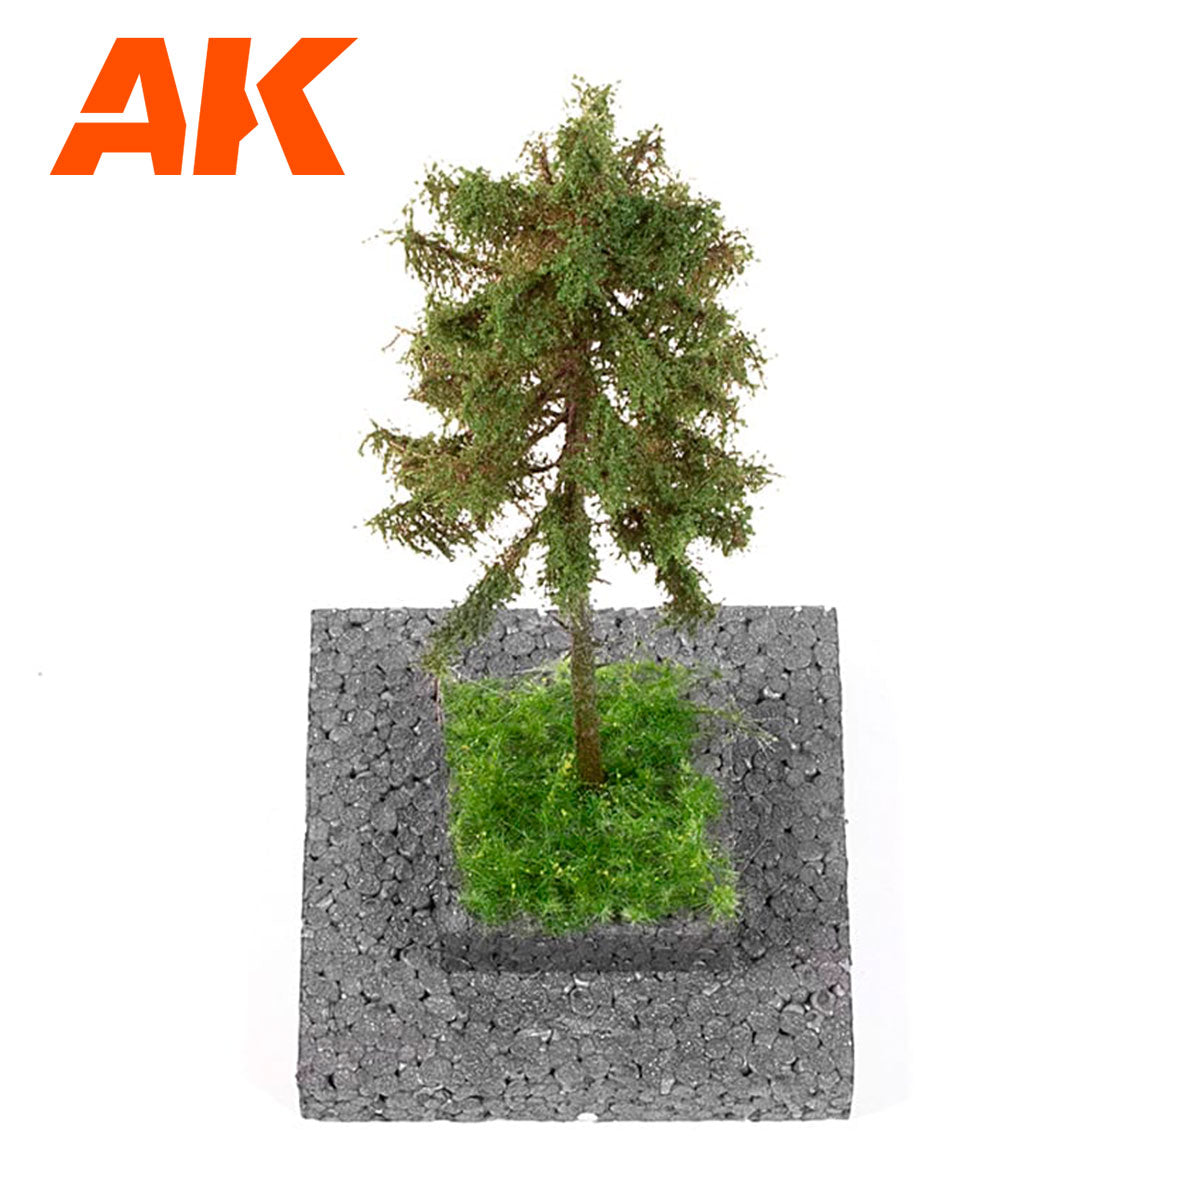 AK8176 - Spruce Tree 1/72